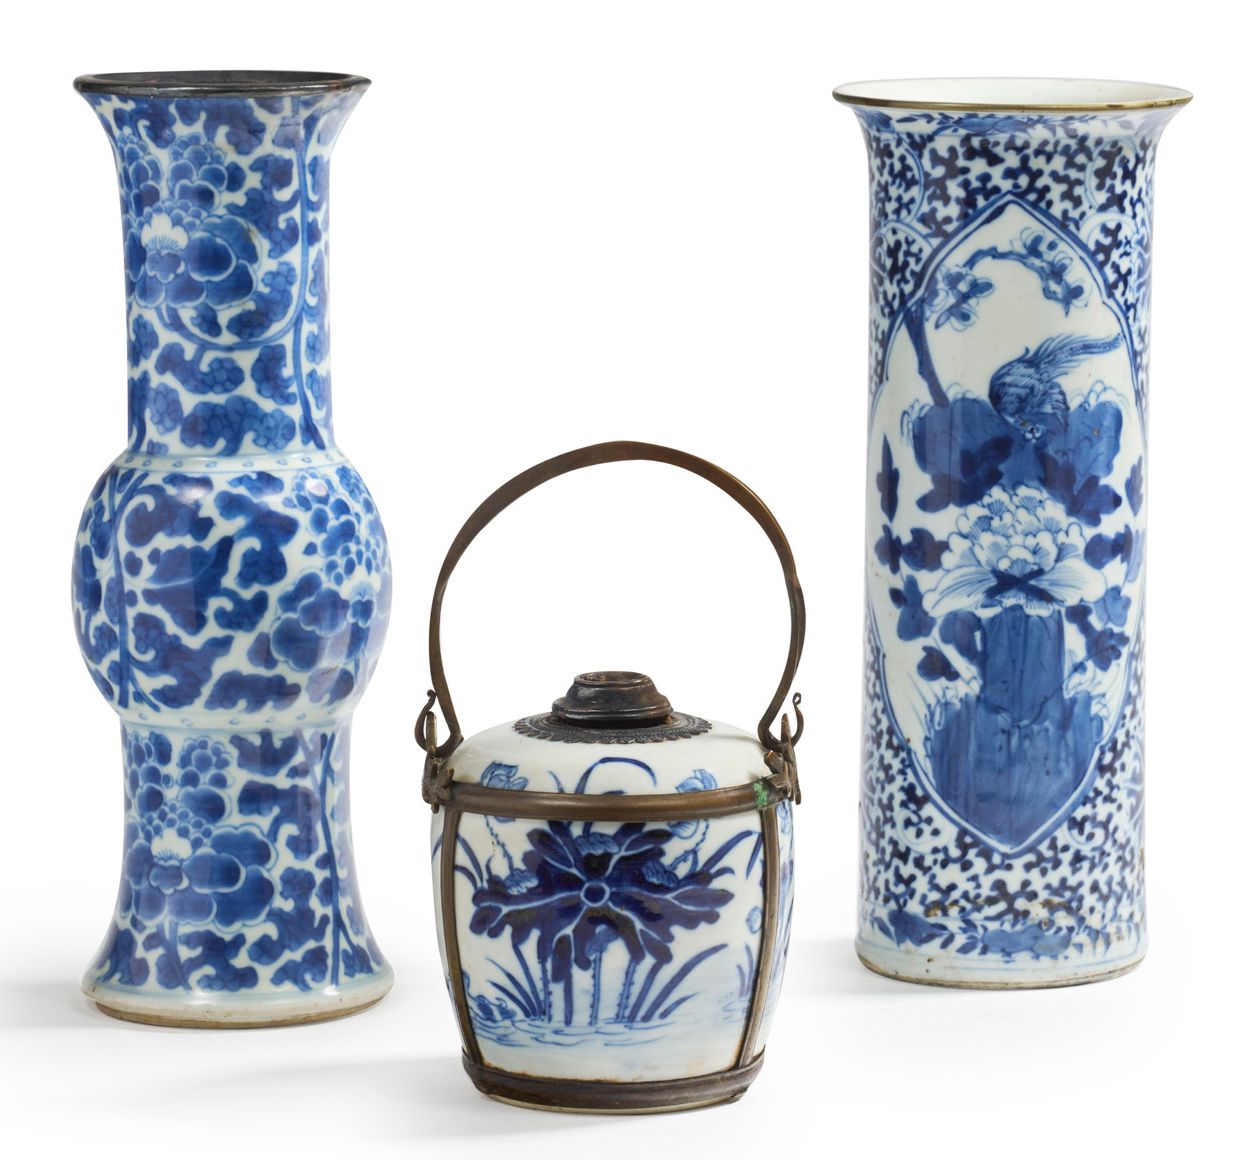 Chine pour le Vietnam XIXe siècle 
Un insieme di tre oggetti in porcellana bianc&hellip;